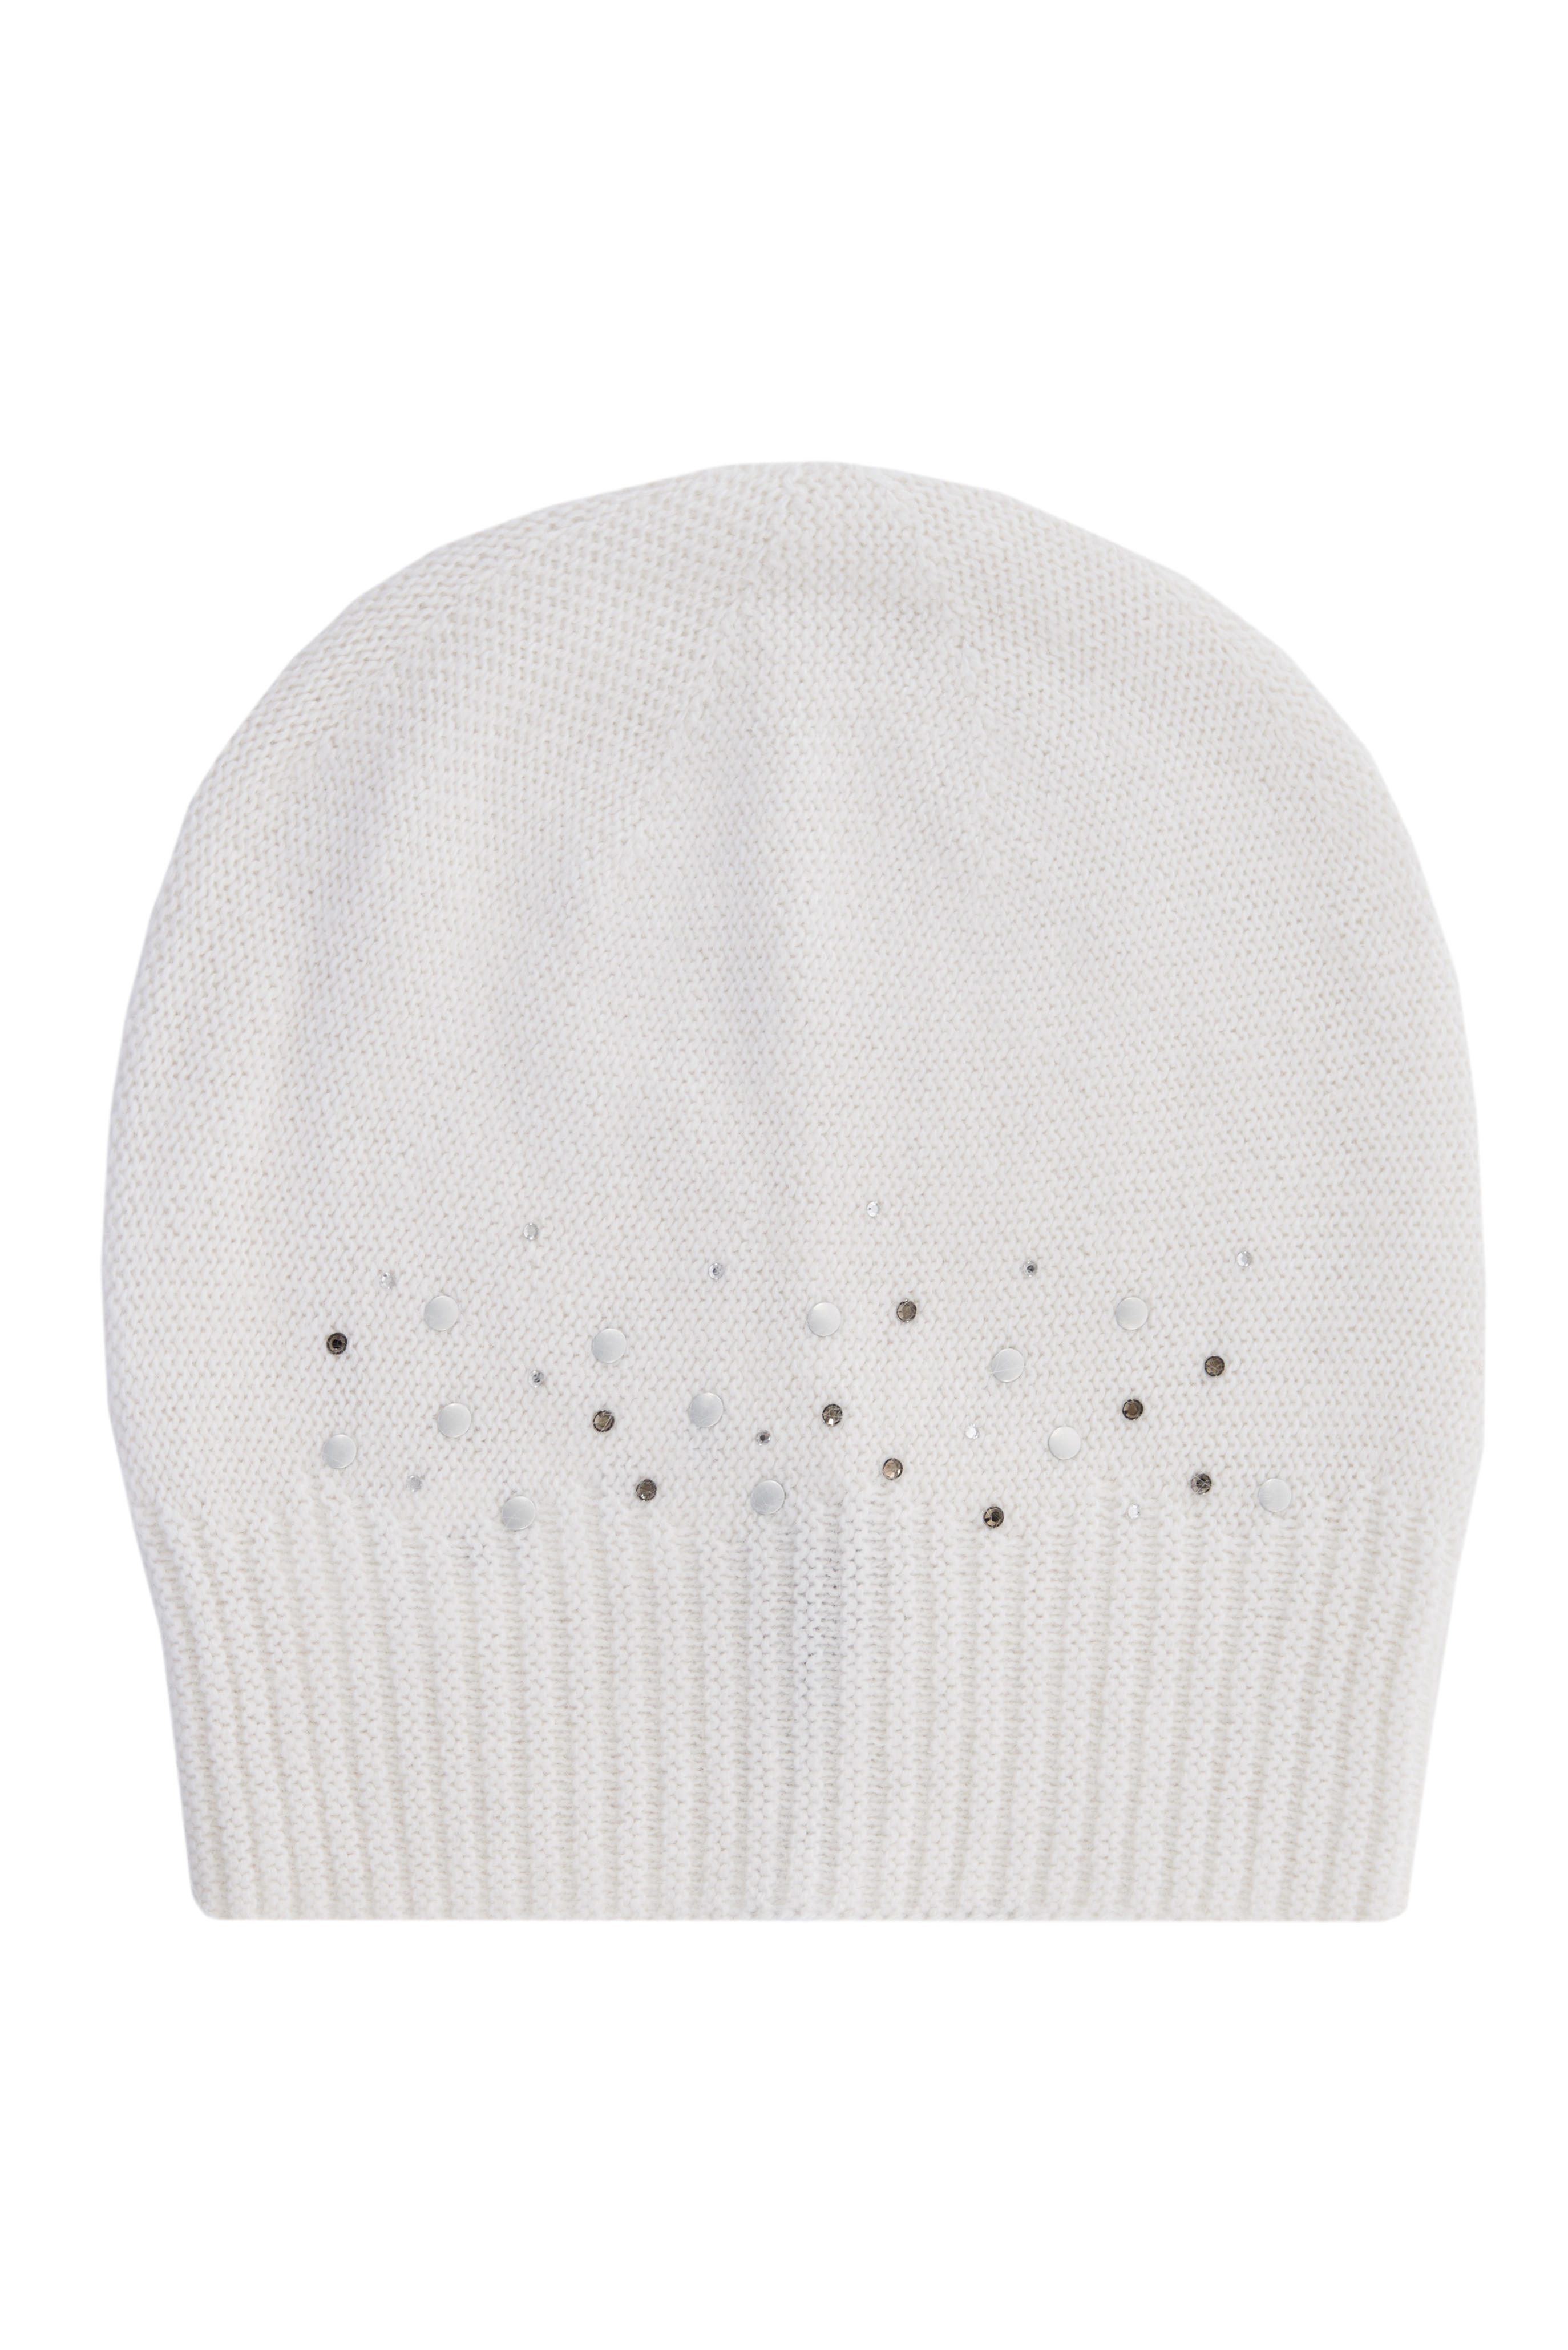 Лёгкая шапка со стразами (арт. baon B347530), размер Б/р 56, цвет белый Лёгкая шапка со стразами (арт. baon B347530) - фото 2